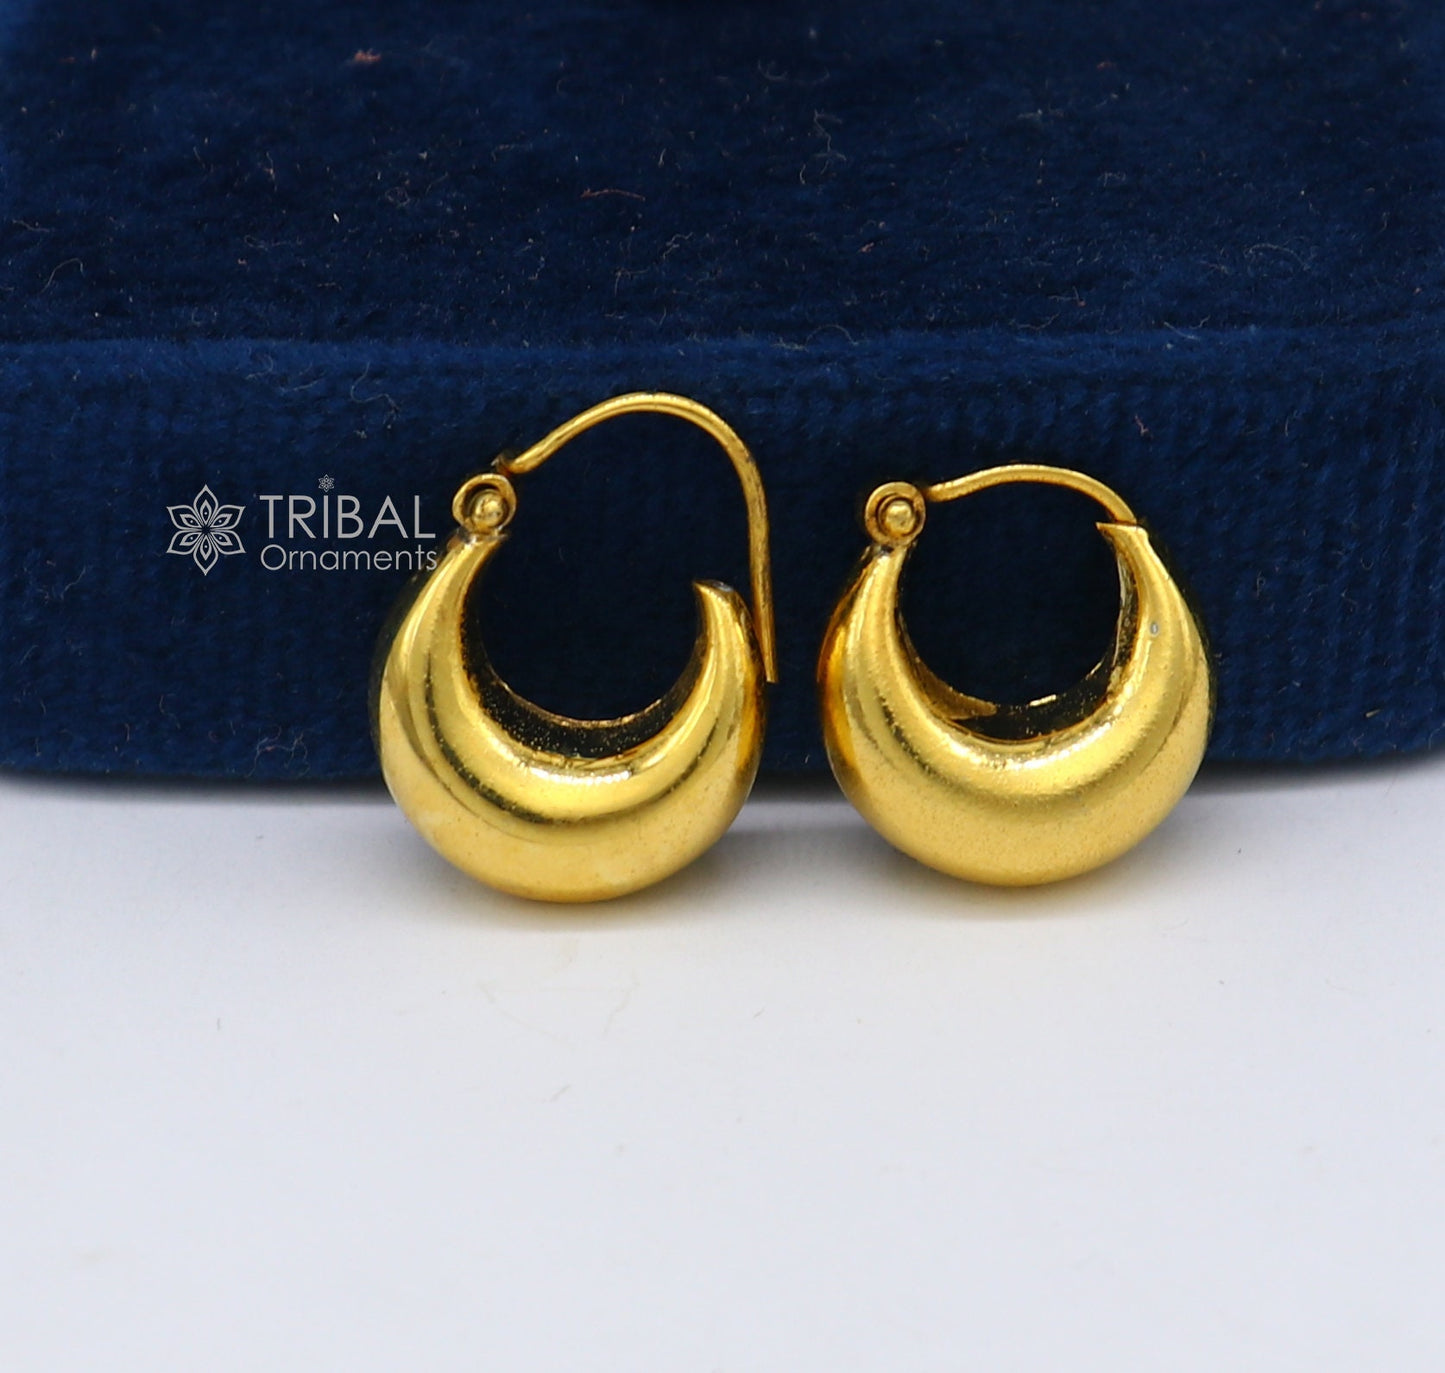 Vintage antique design handmade 925 sterling silver gorgeous gold polished hoops boho earrings bali tribal Banjara jewelry s1303 - TRIBAL ORNAMENTS